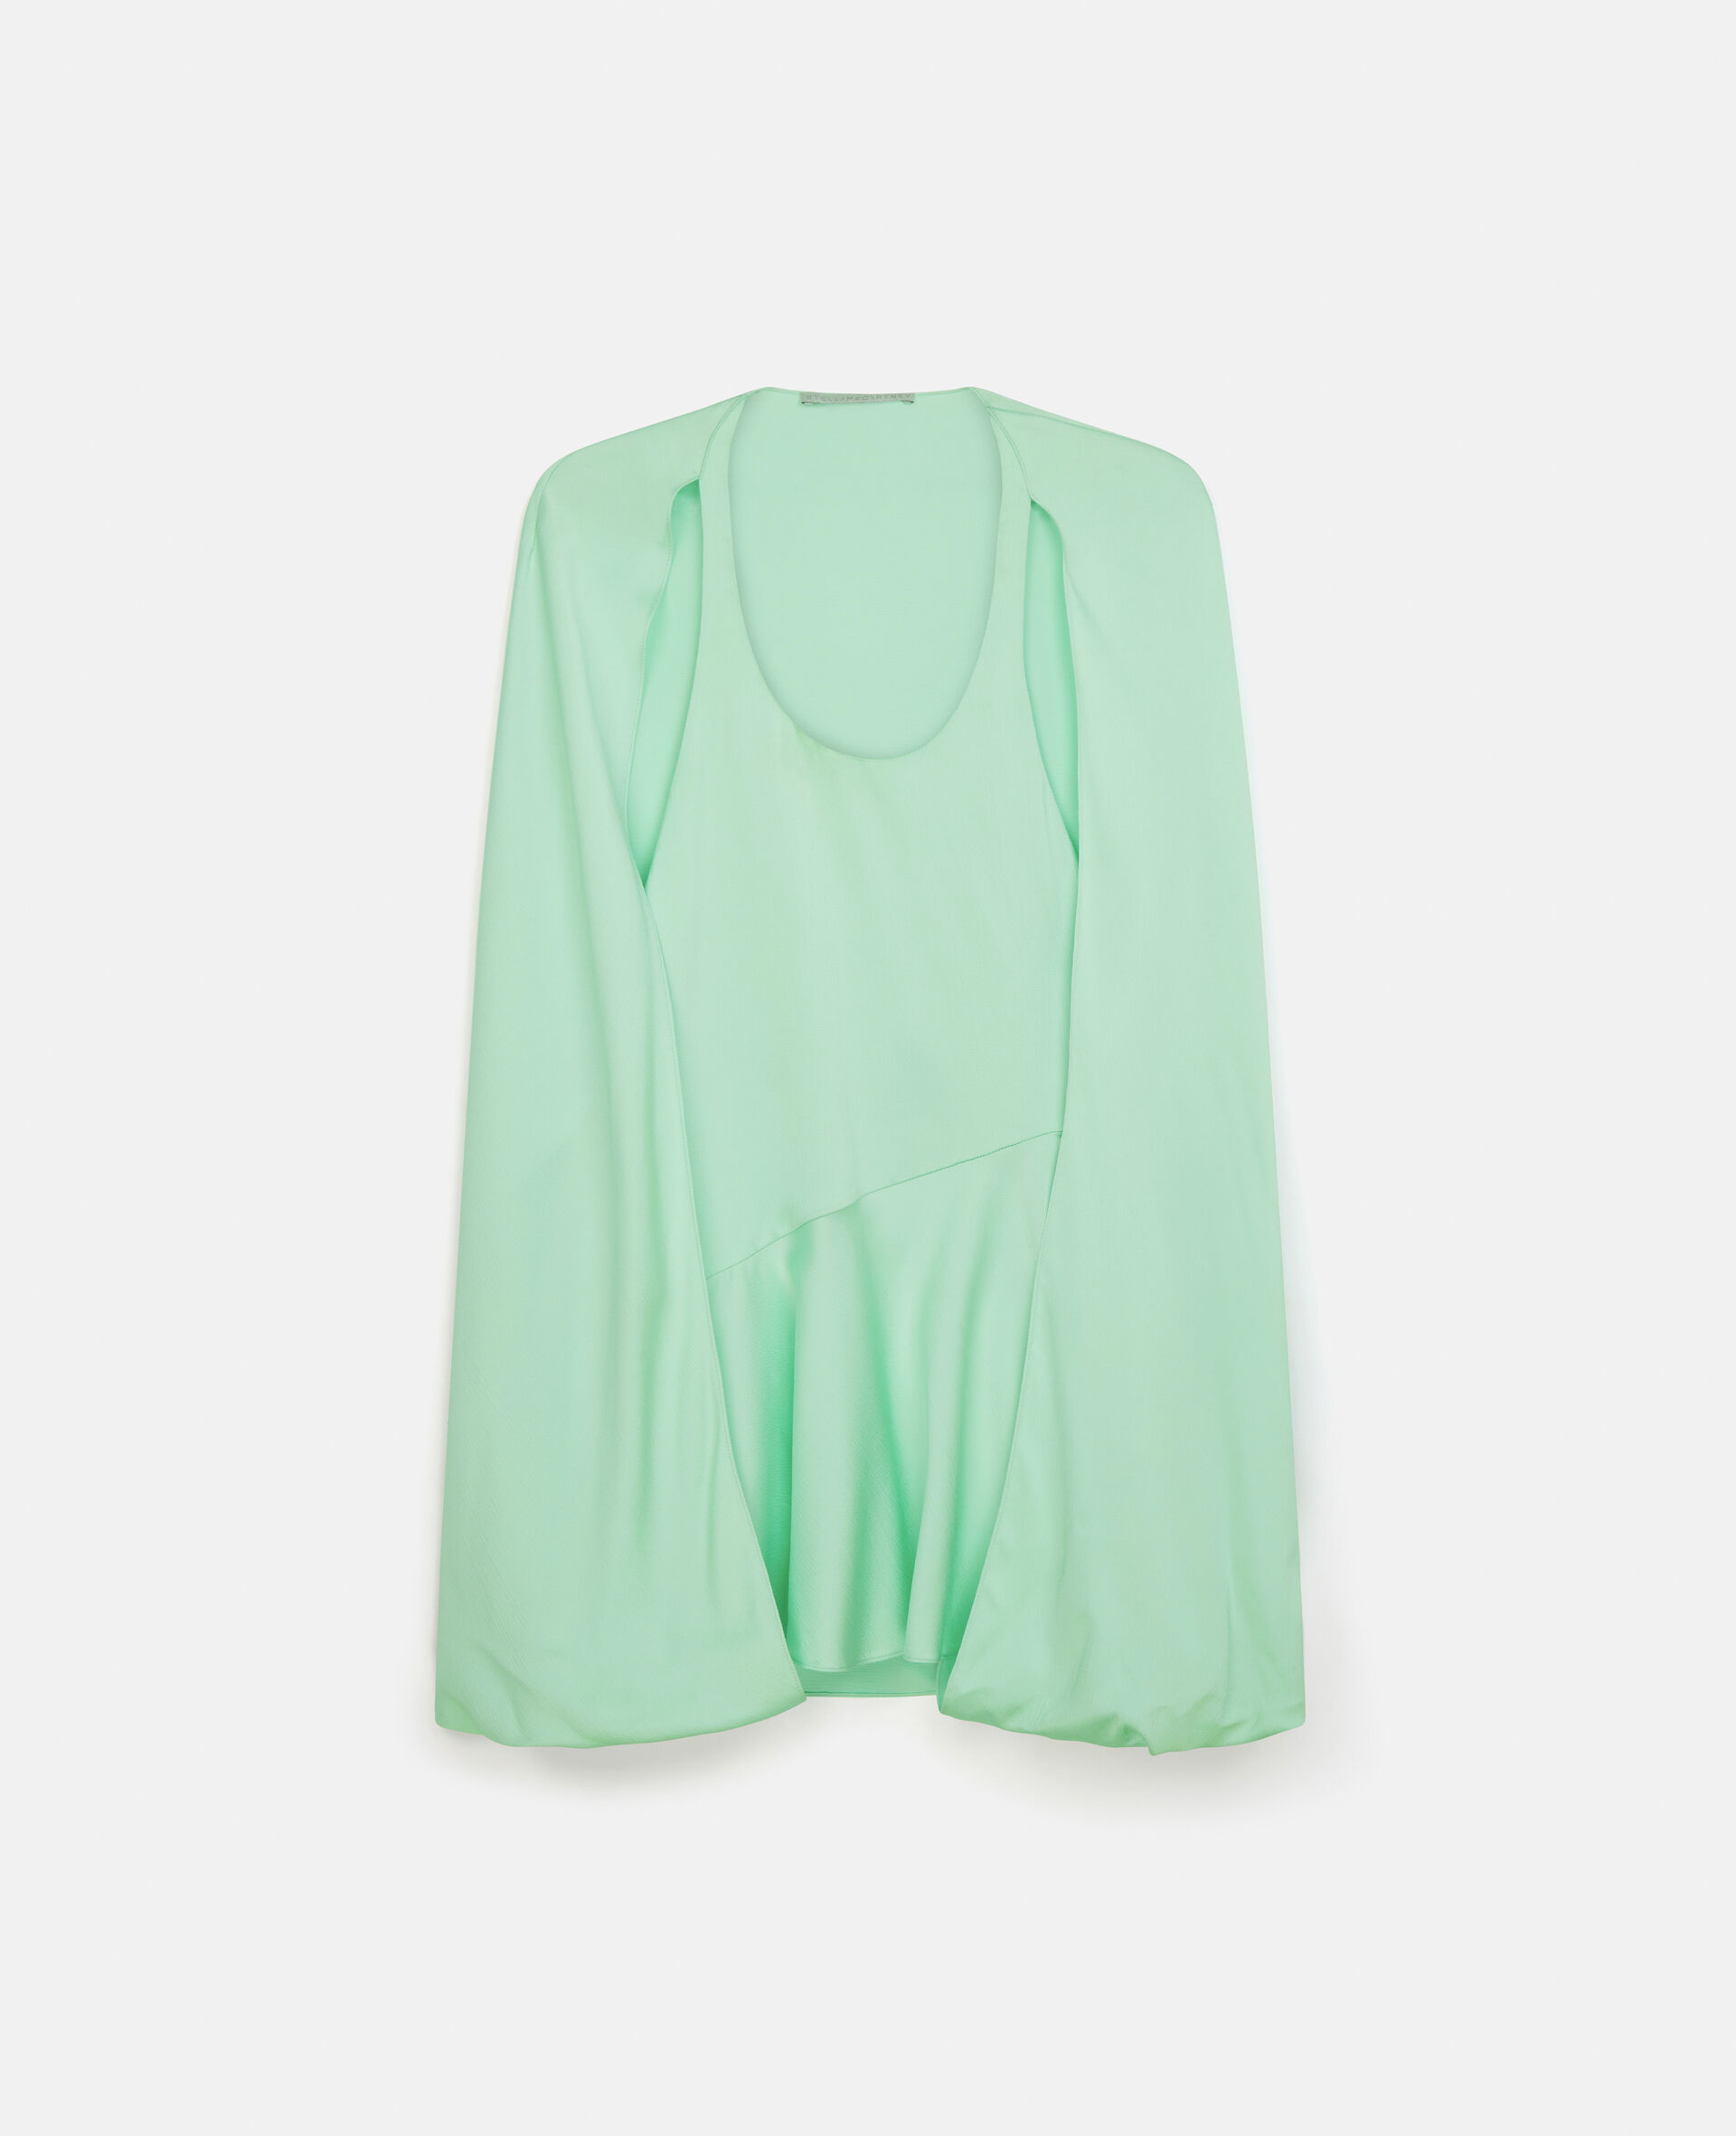 Crystal Strass Cape Mini Dress-Green-large